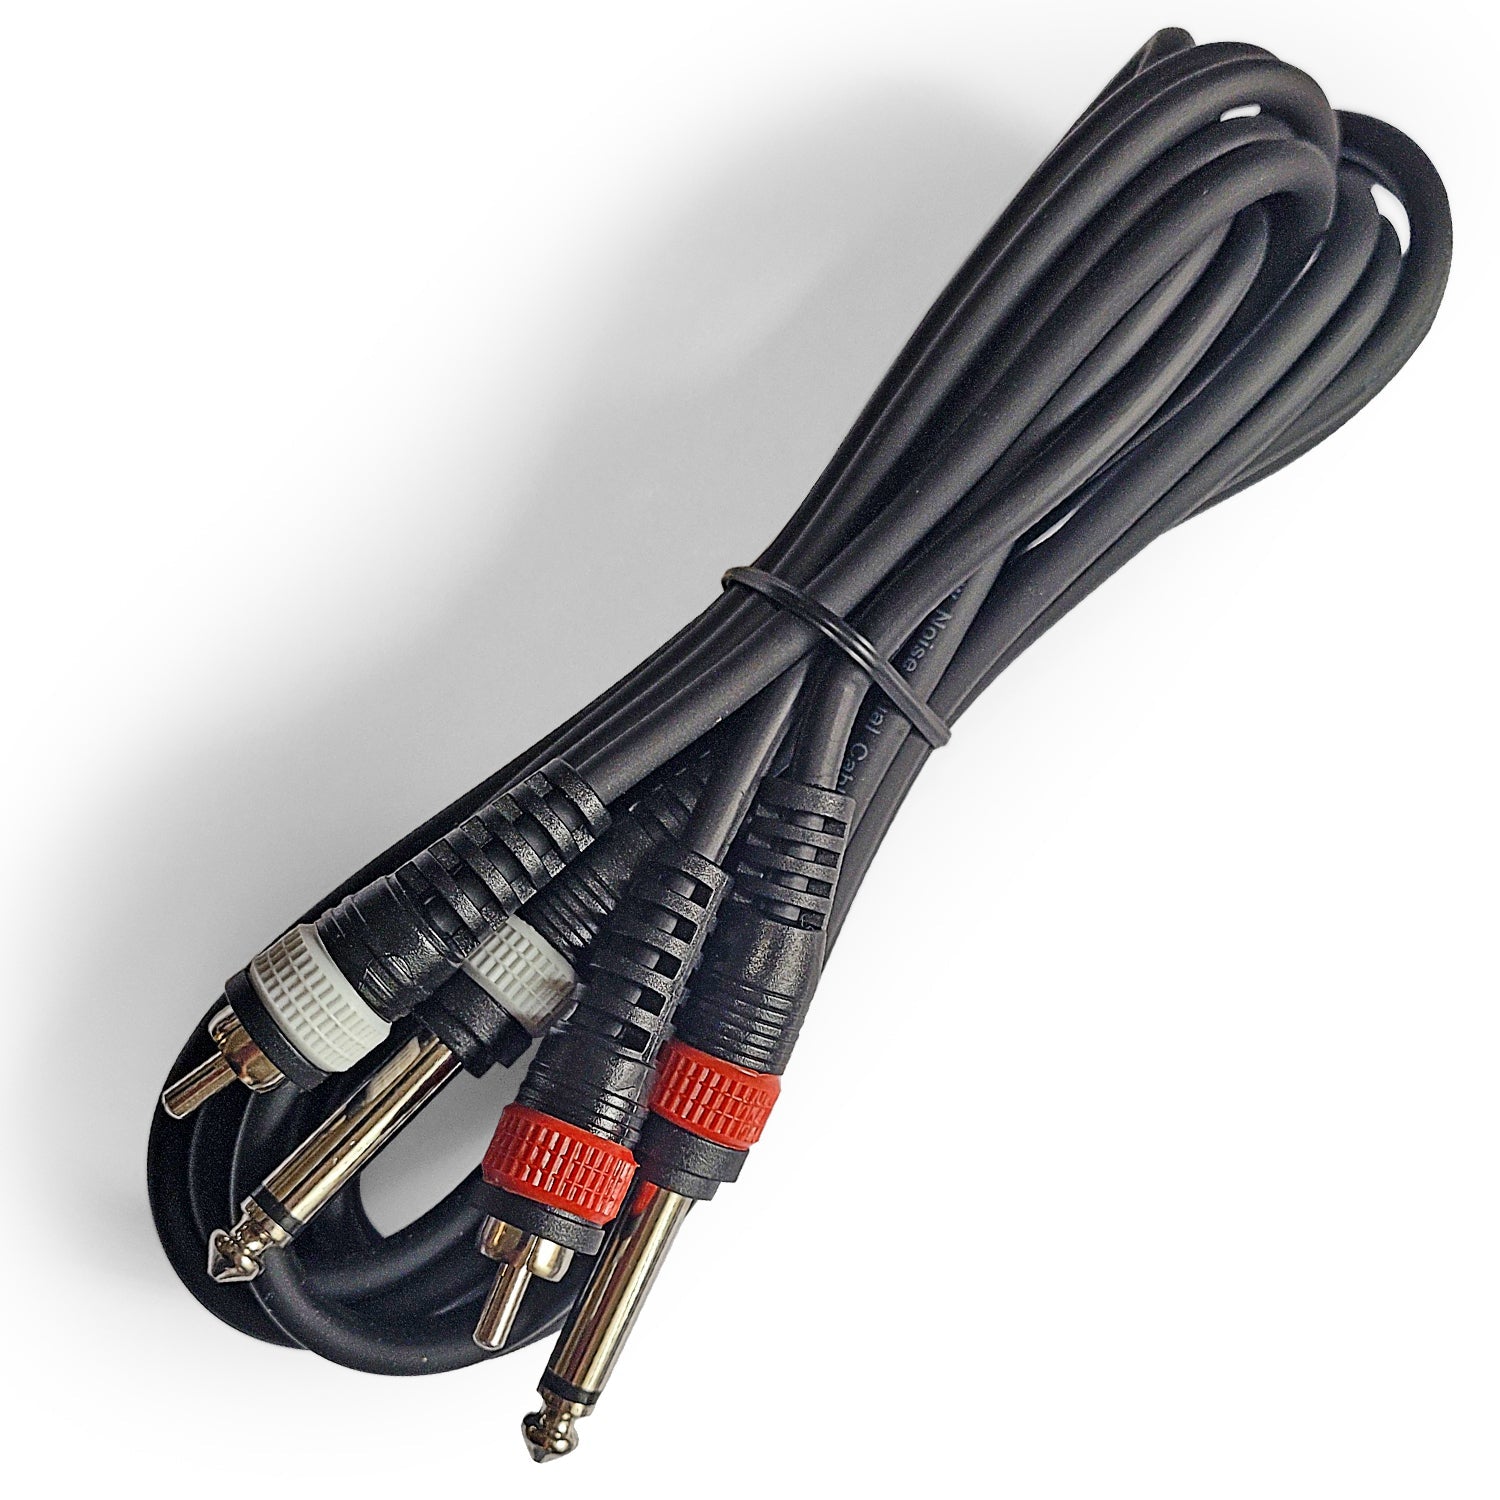 RCA Audio Cables - 3FT Single Mono RCA Cable, ShowMeCables